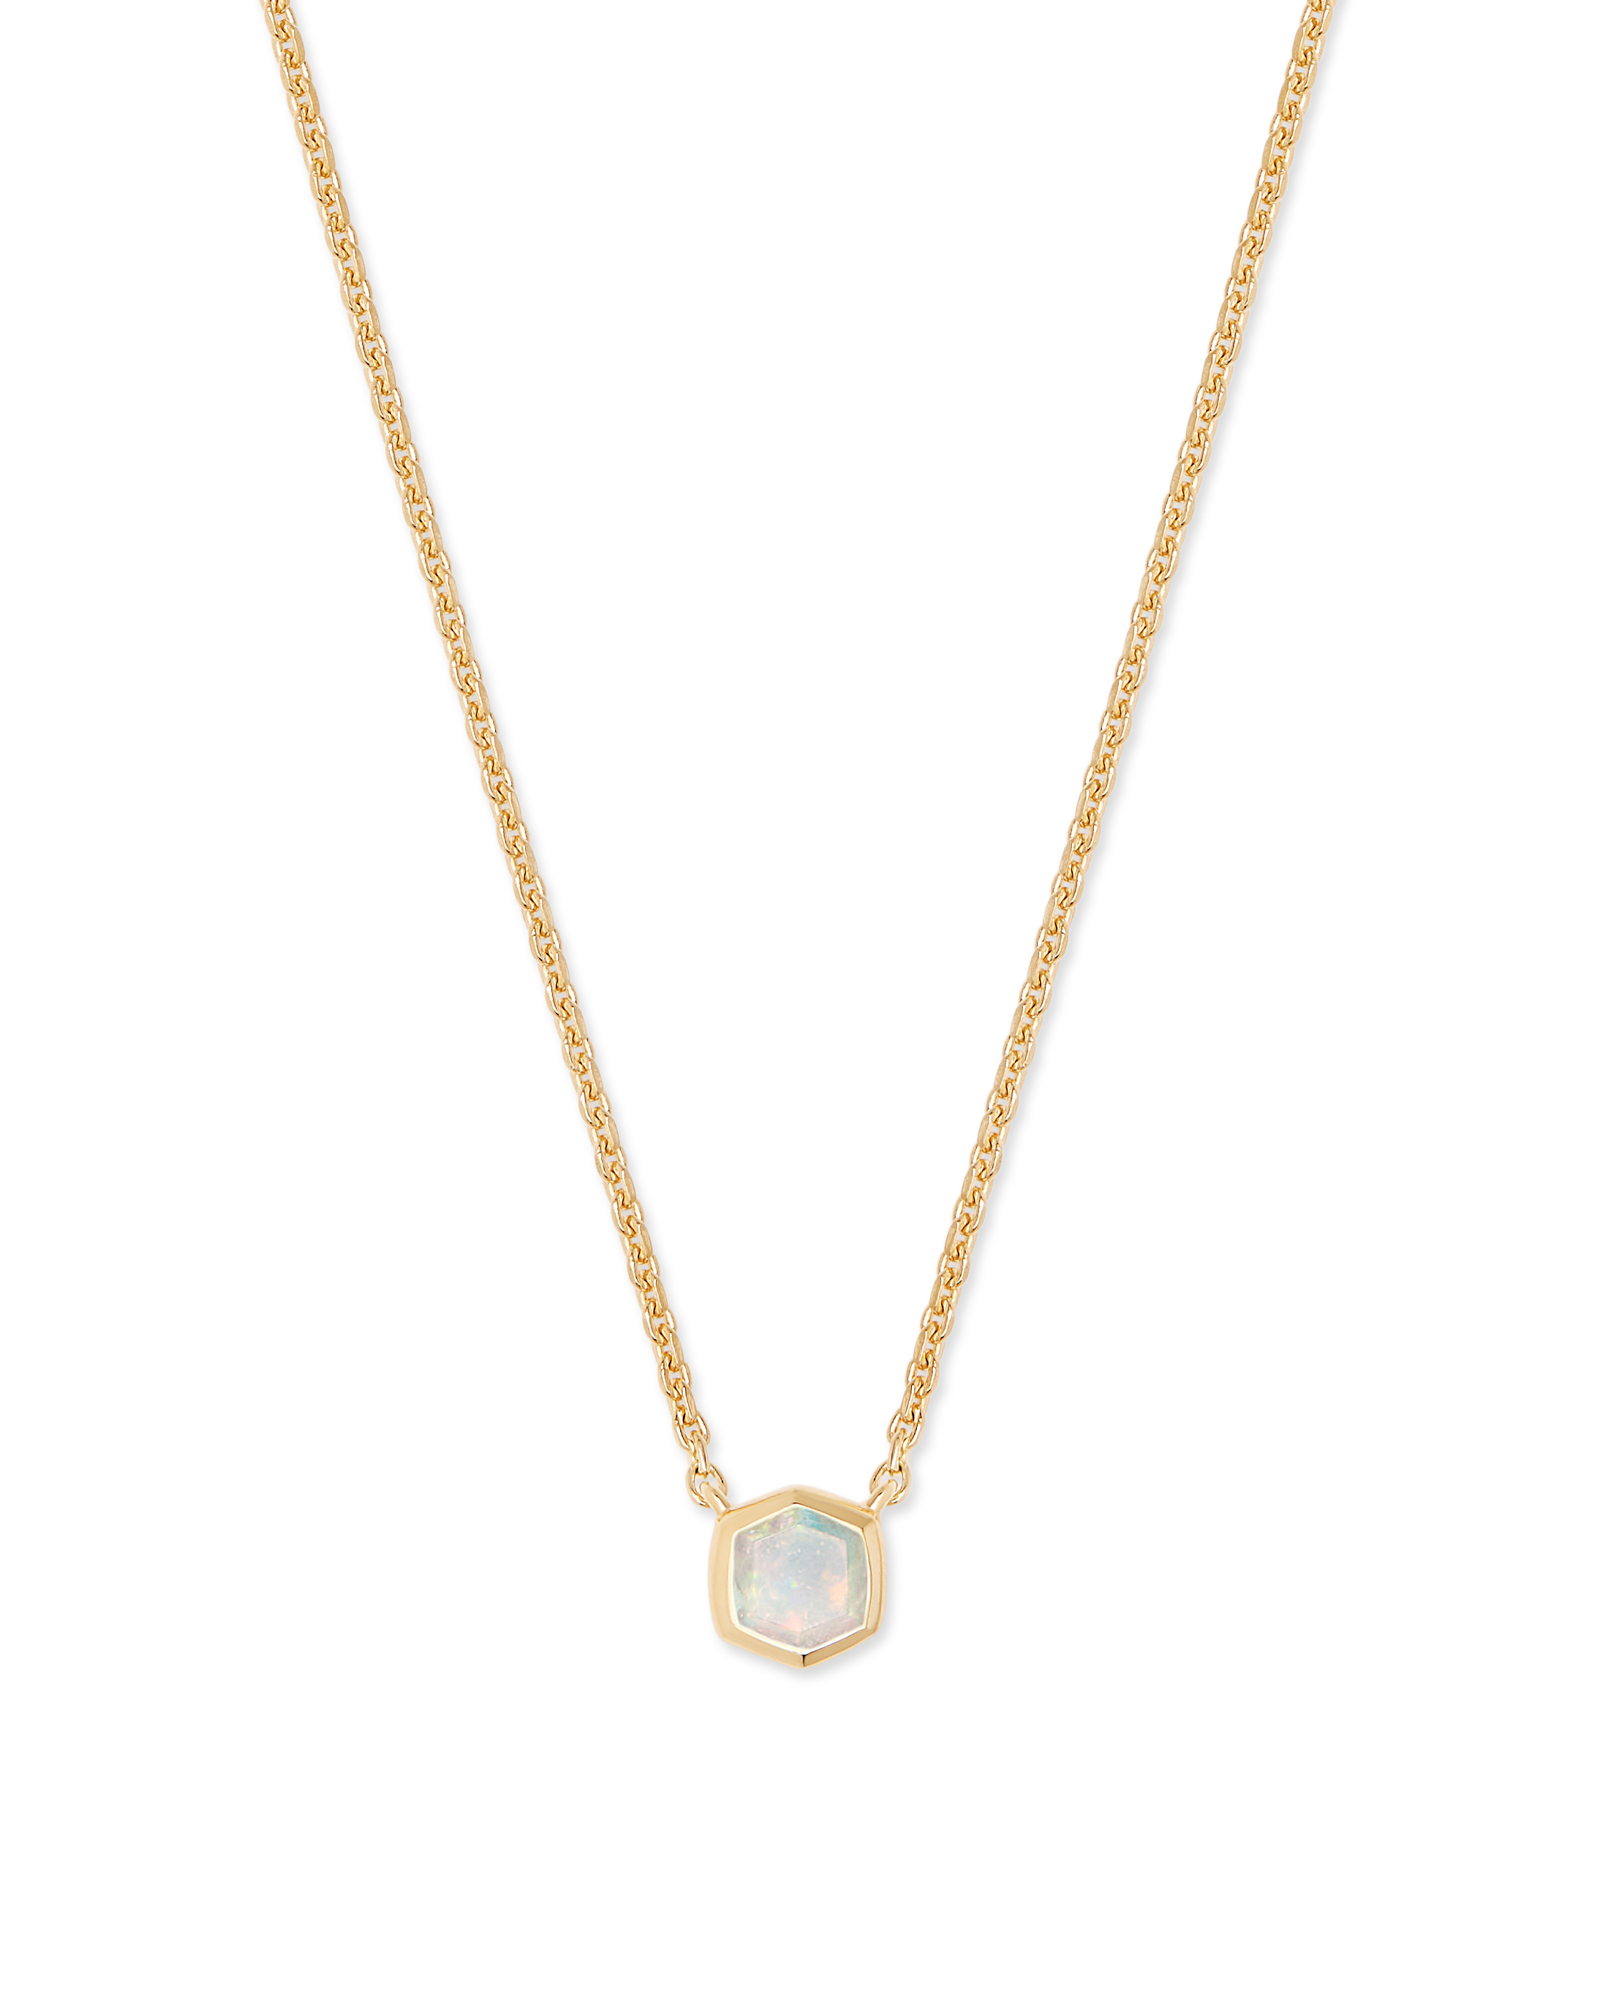 Davie 18K Gold Vermeil Pendant Necklace in White Ethiopian Opal | Kendra Scott